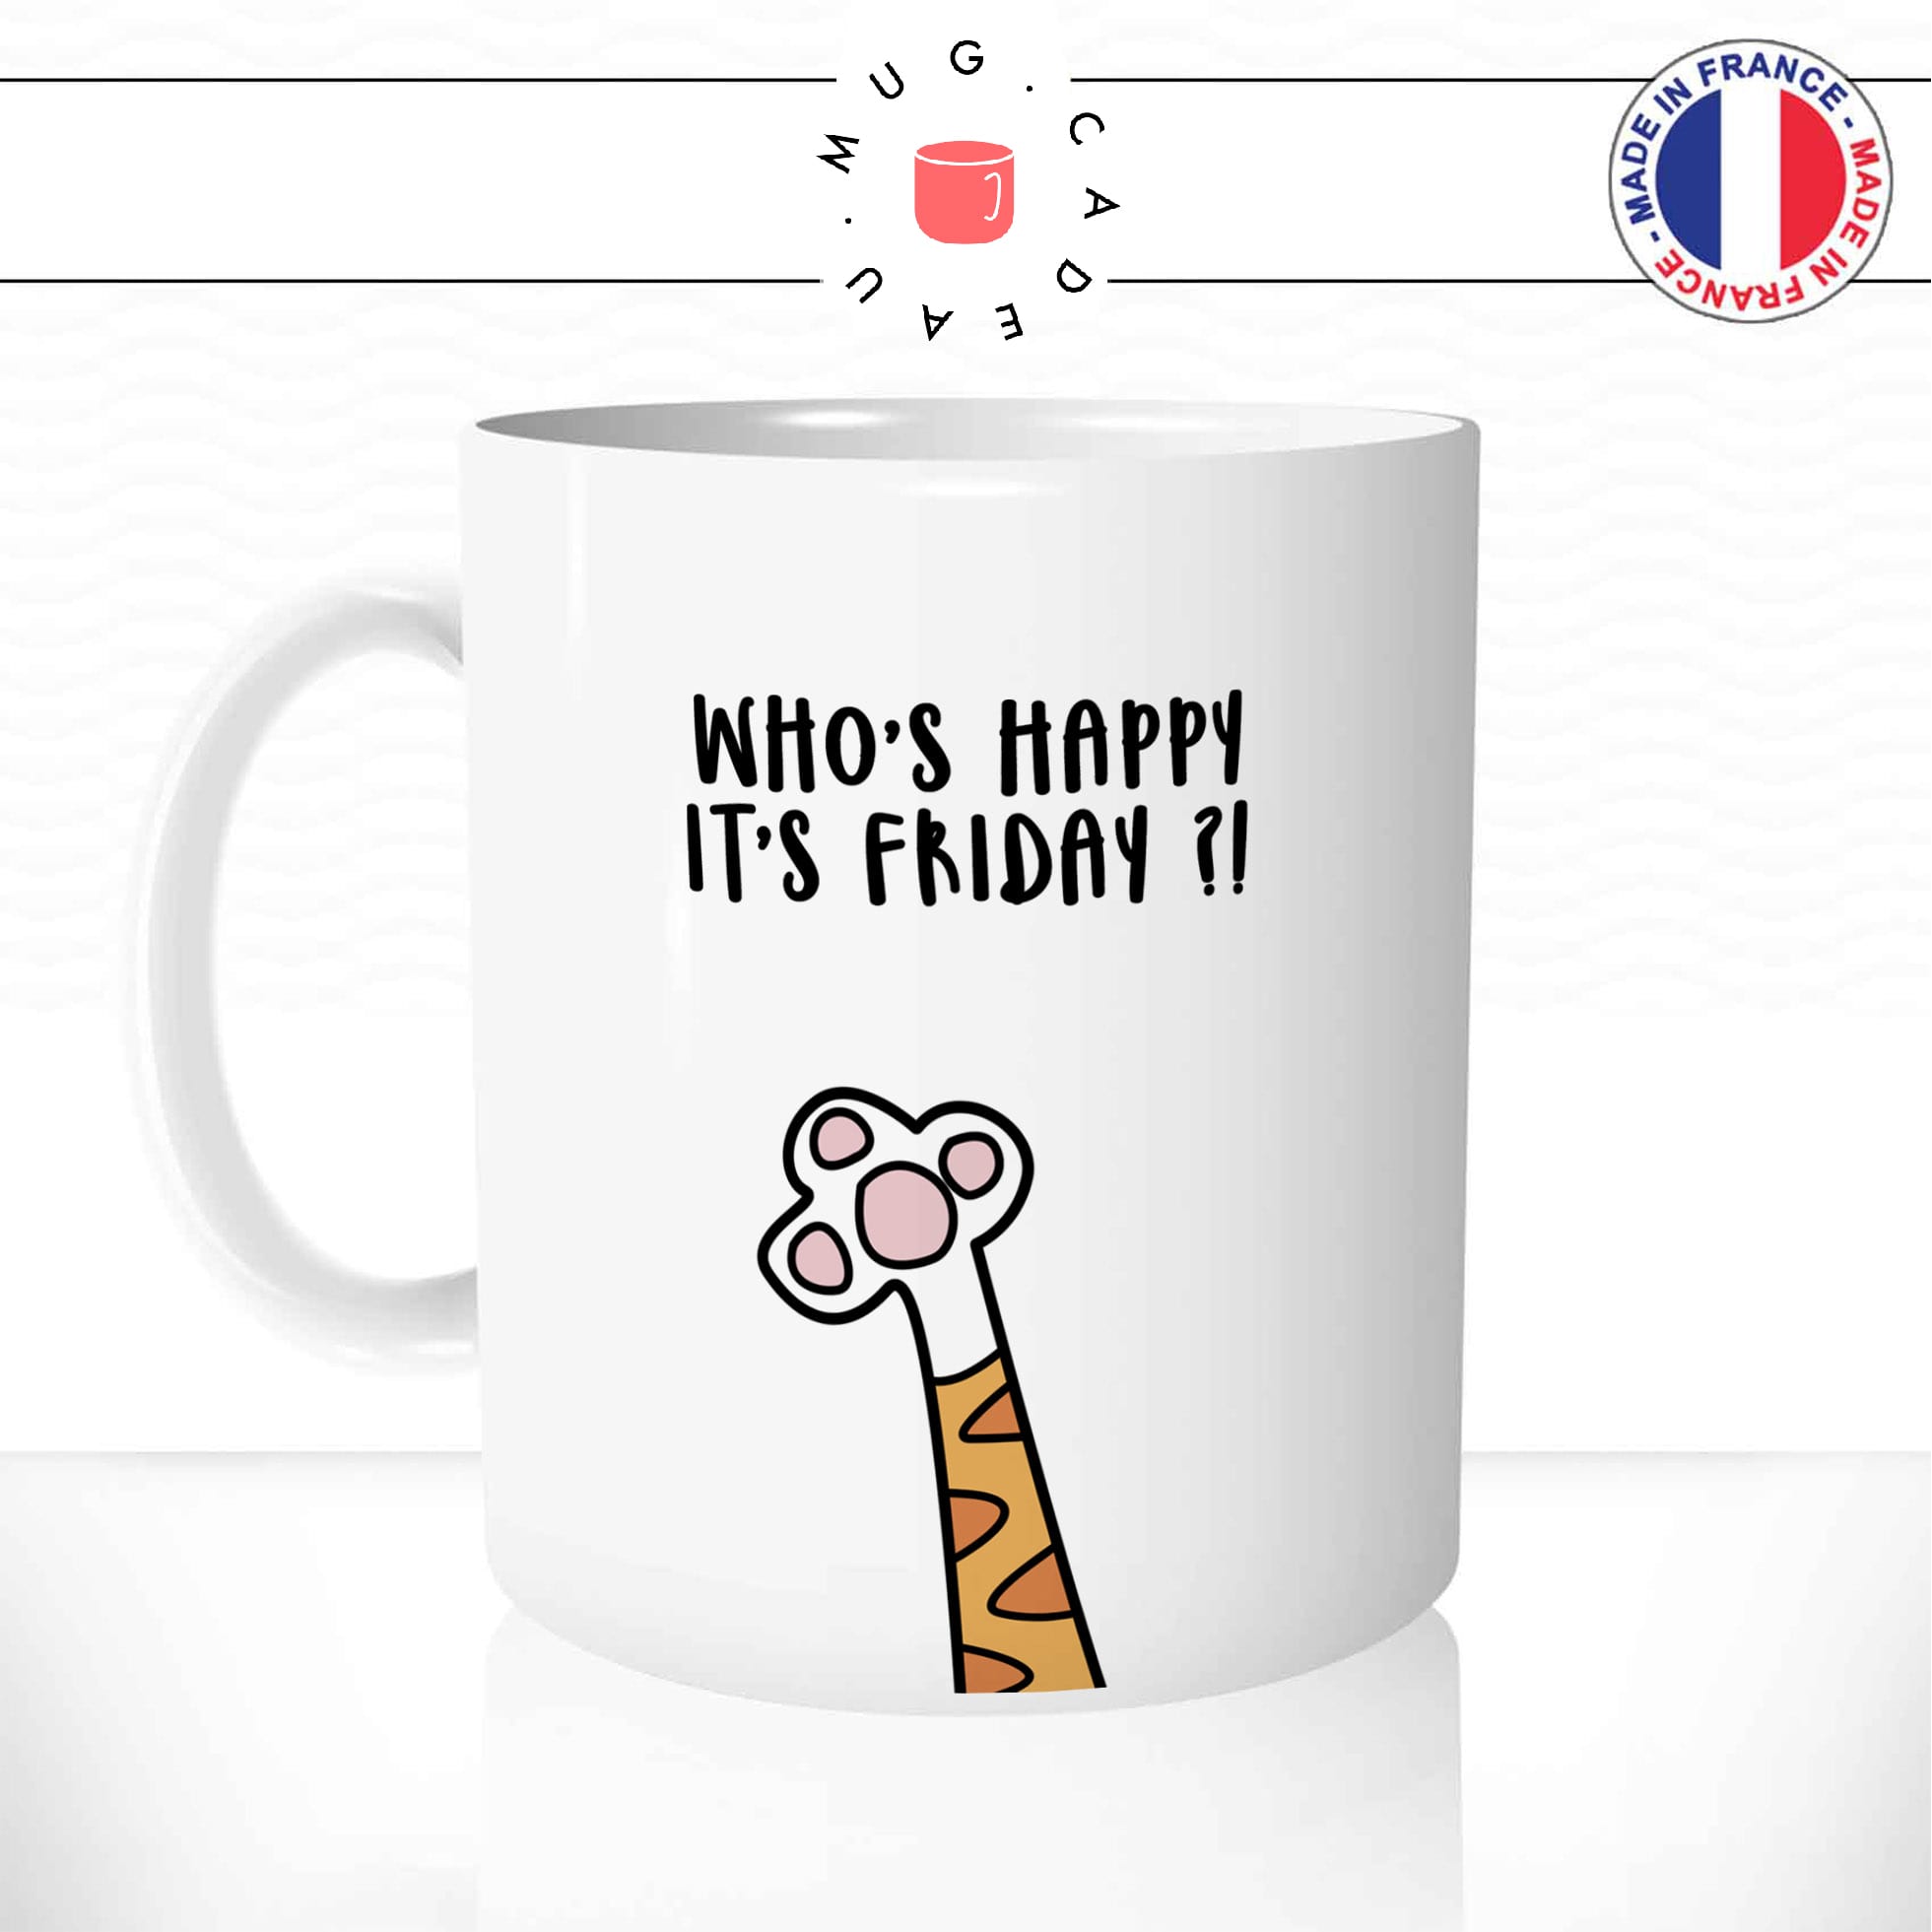 mug-tasse-patte-chat-cat-chaton-roux-week-end-friday-vendredi-who's-happy-it's-fin-semaine-travail-idee-cadeau-original-personnalisé1